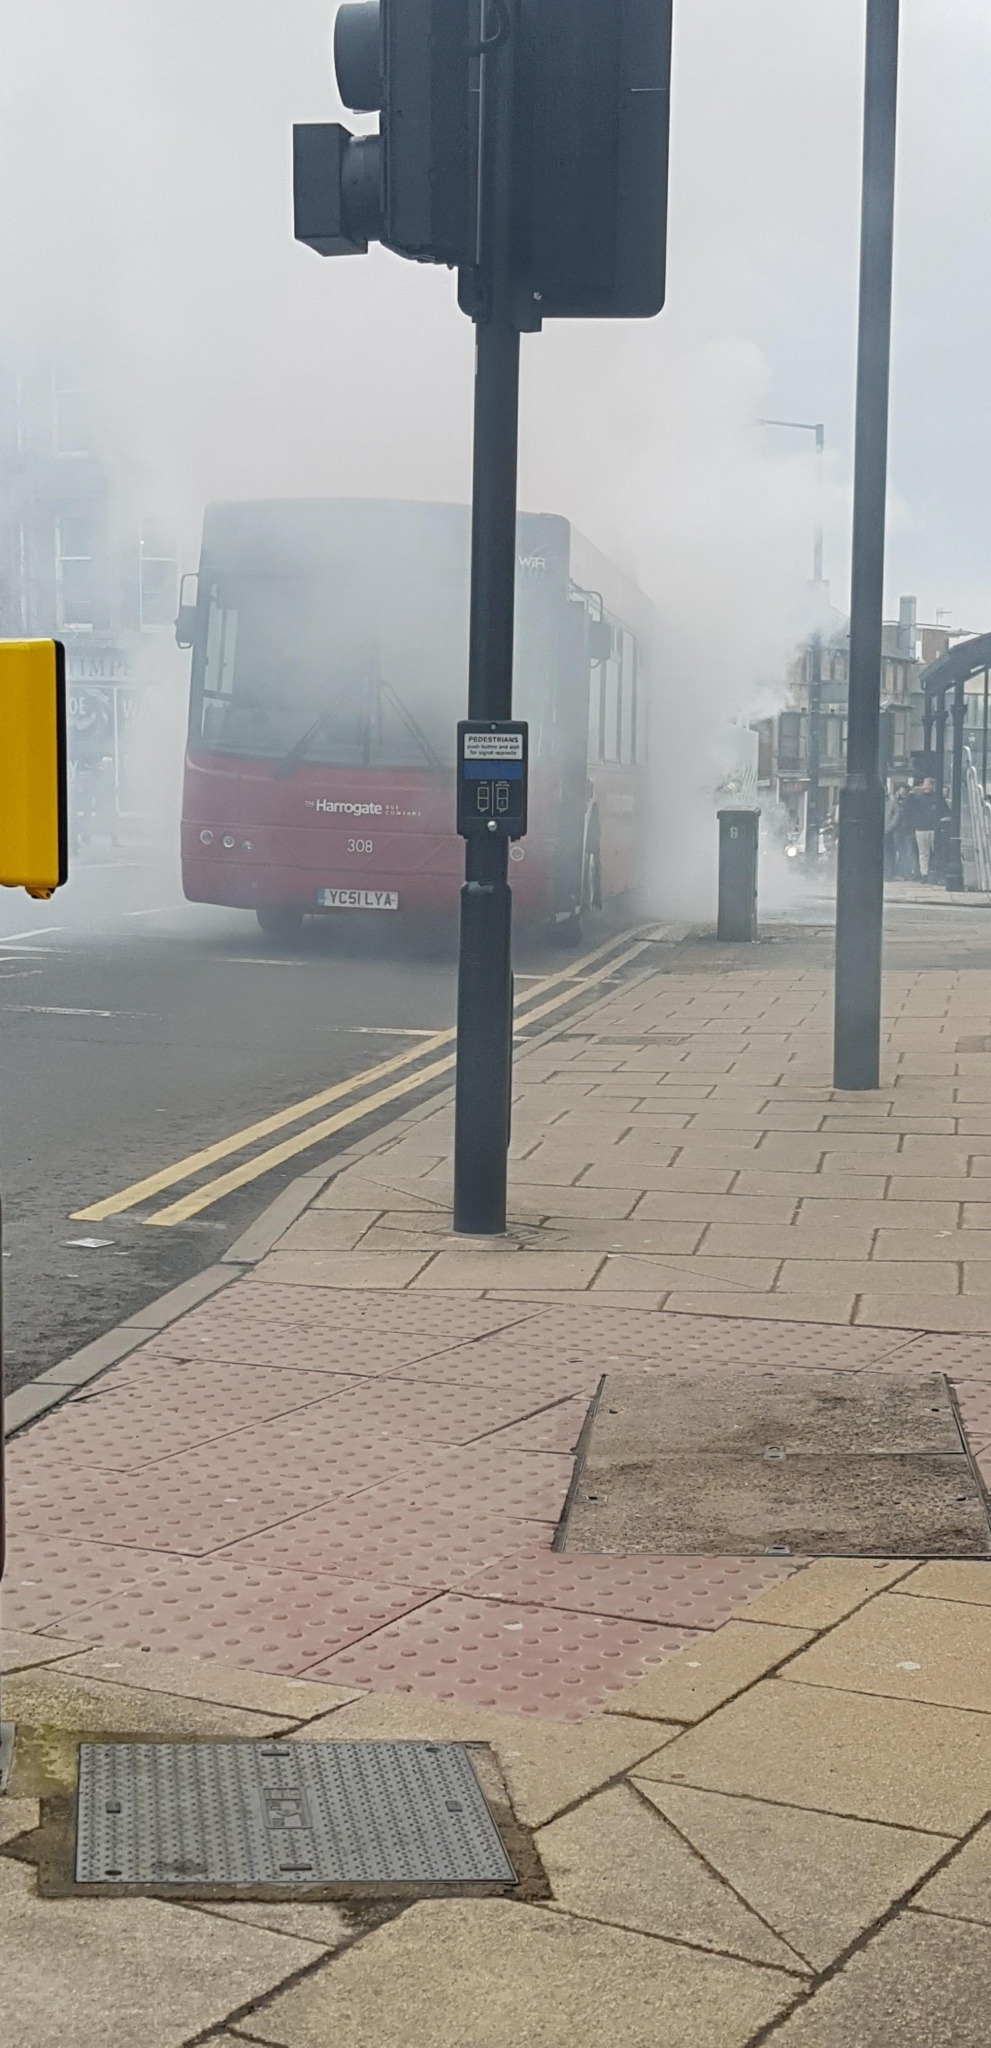 Bus Fire In Harrogate Town Centre